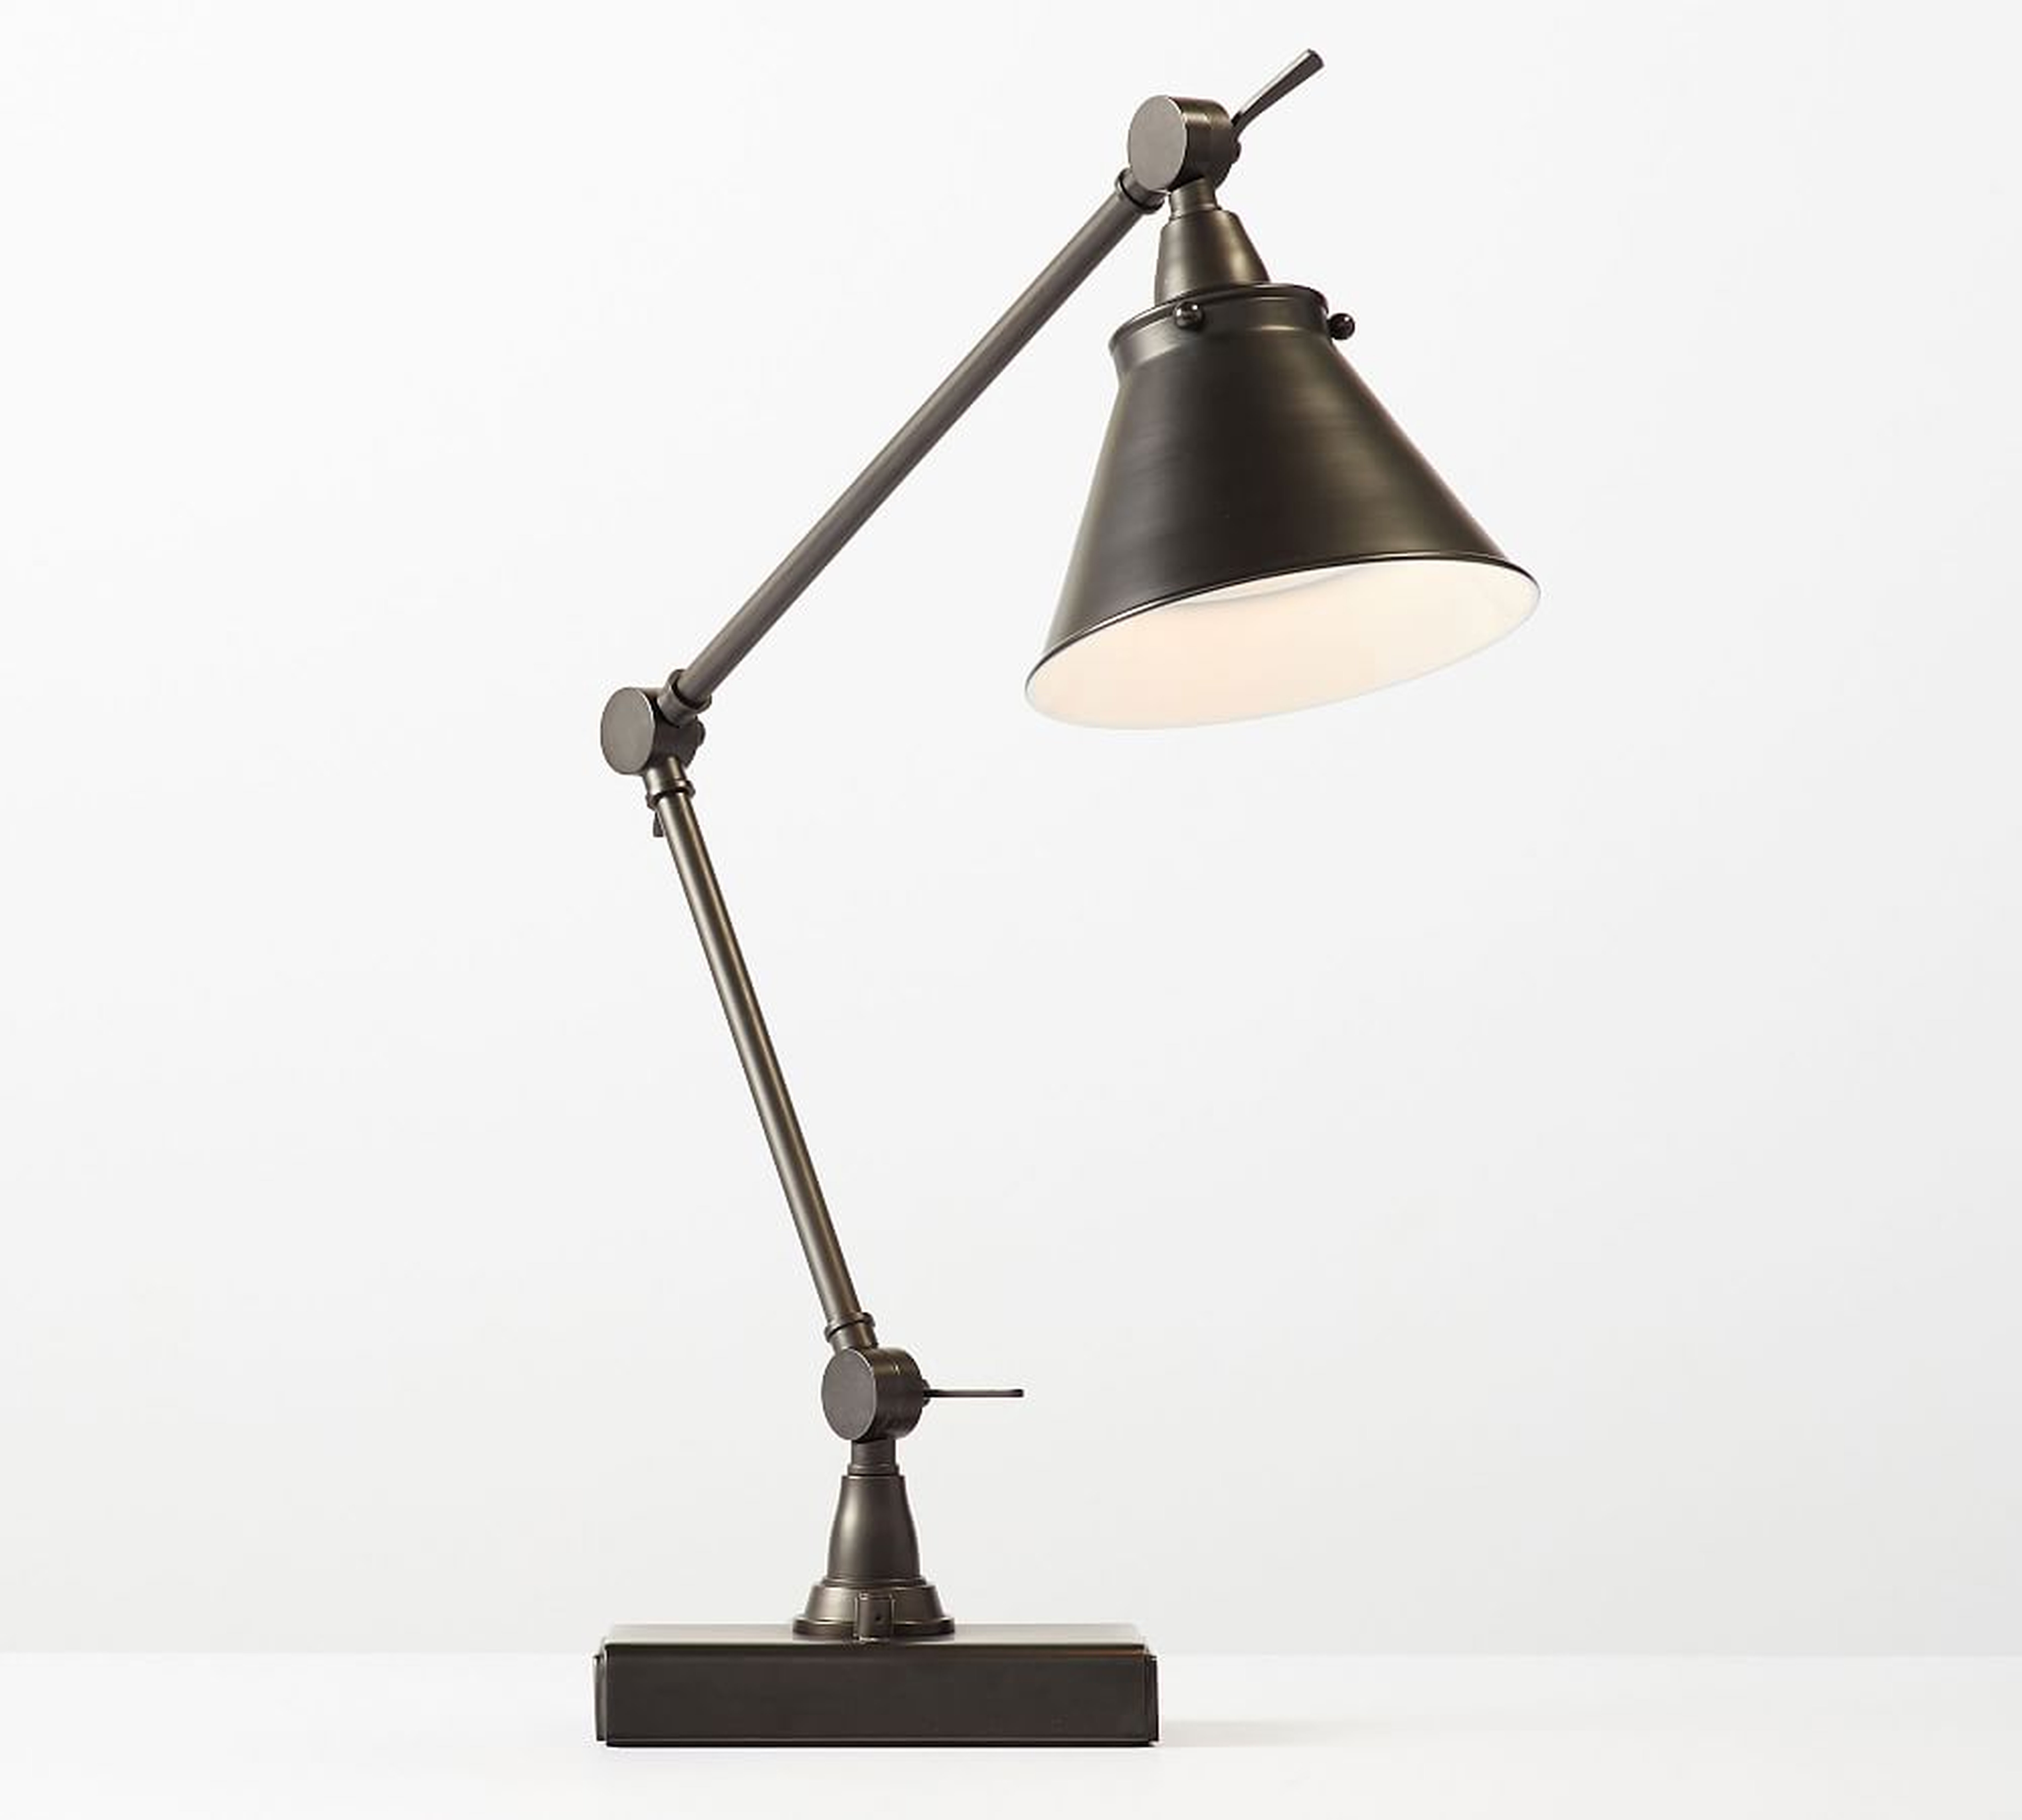 Architect's USB Adjustable Task Table Lamp, Bronze - Pottery Barn